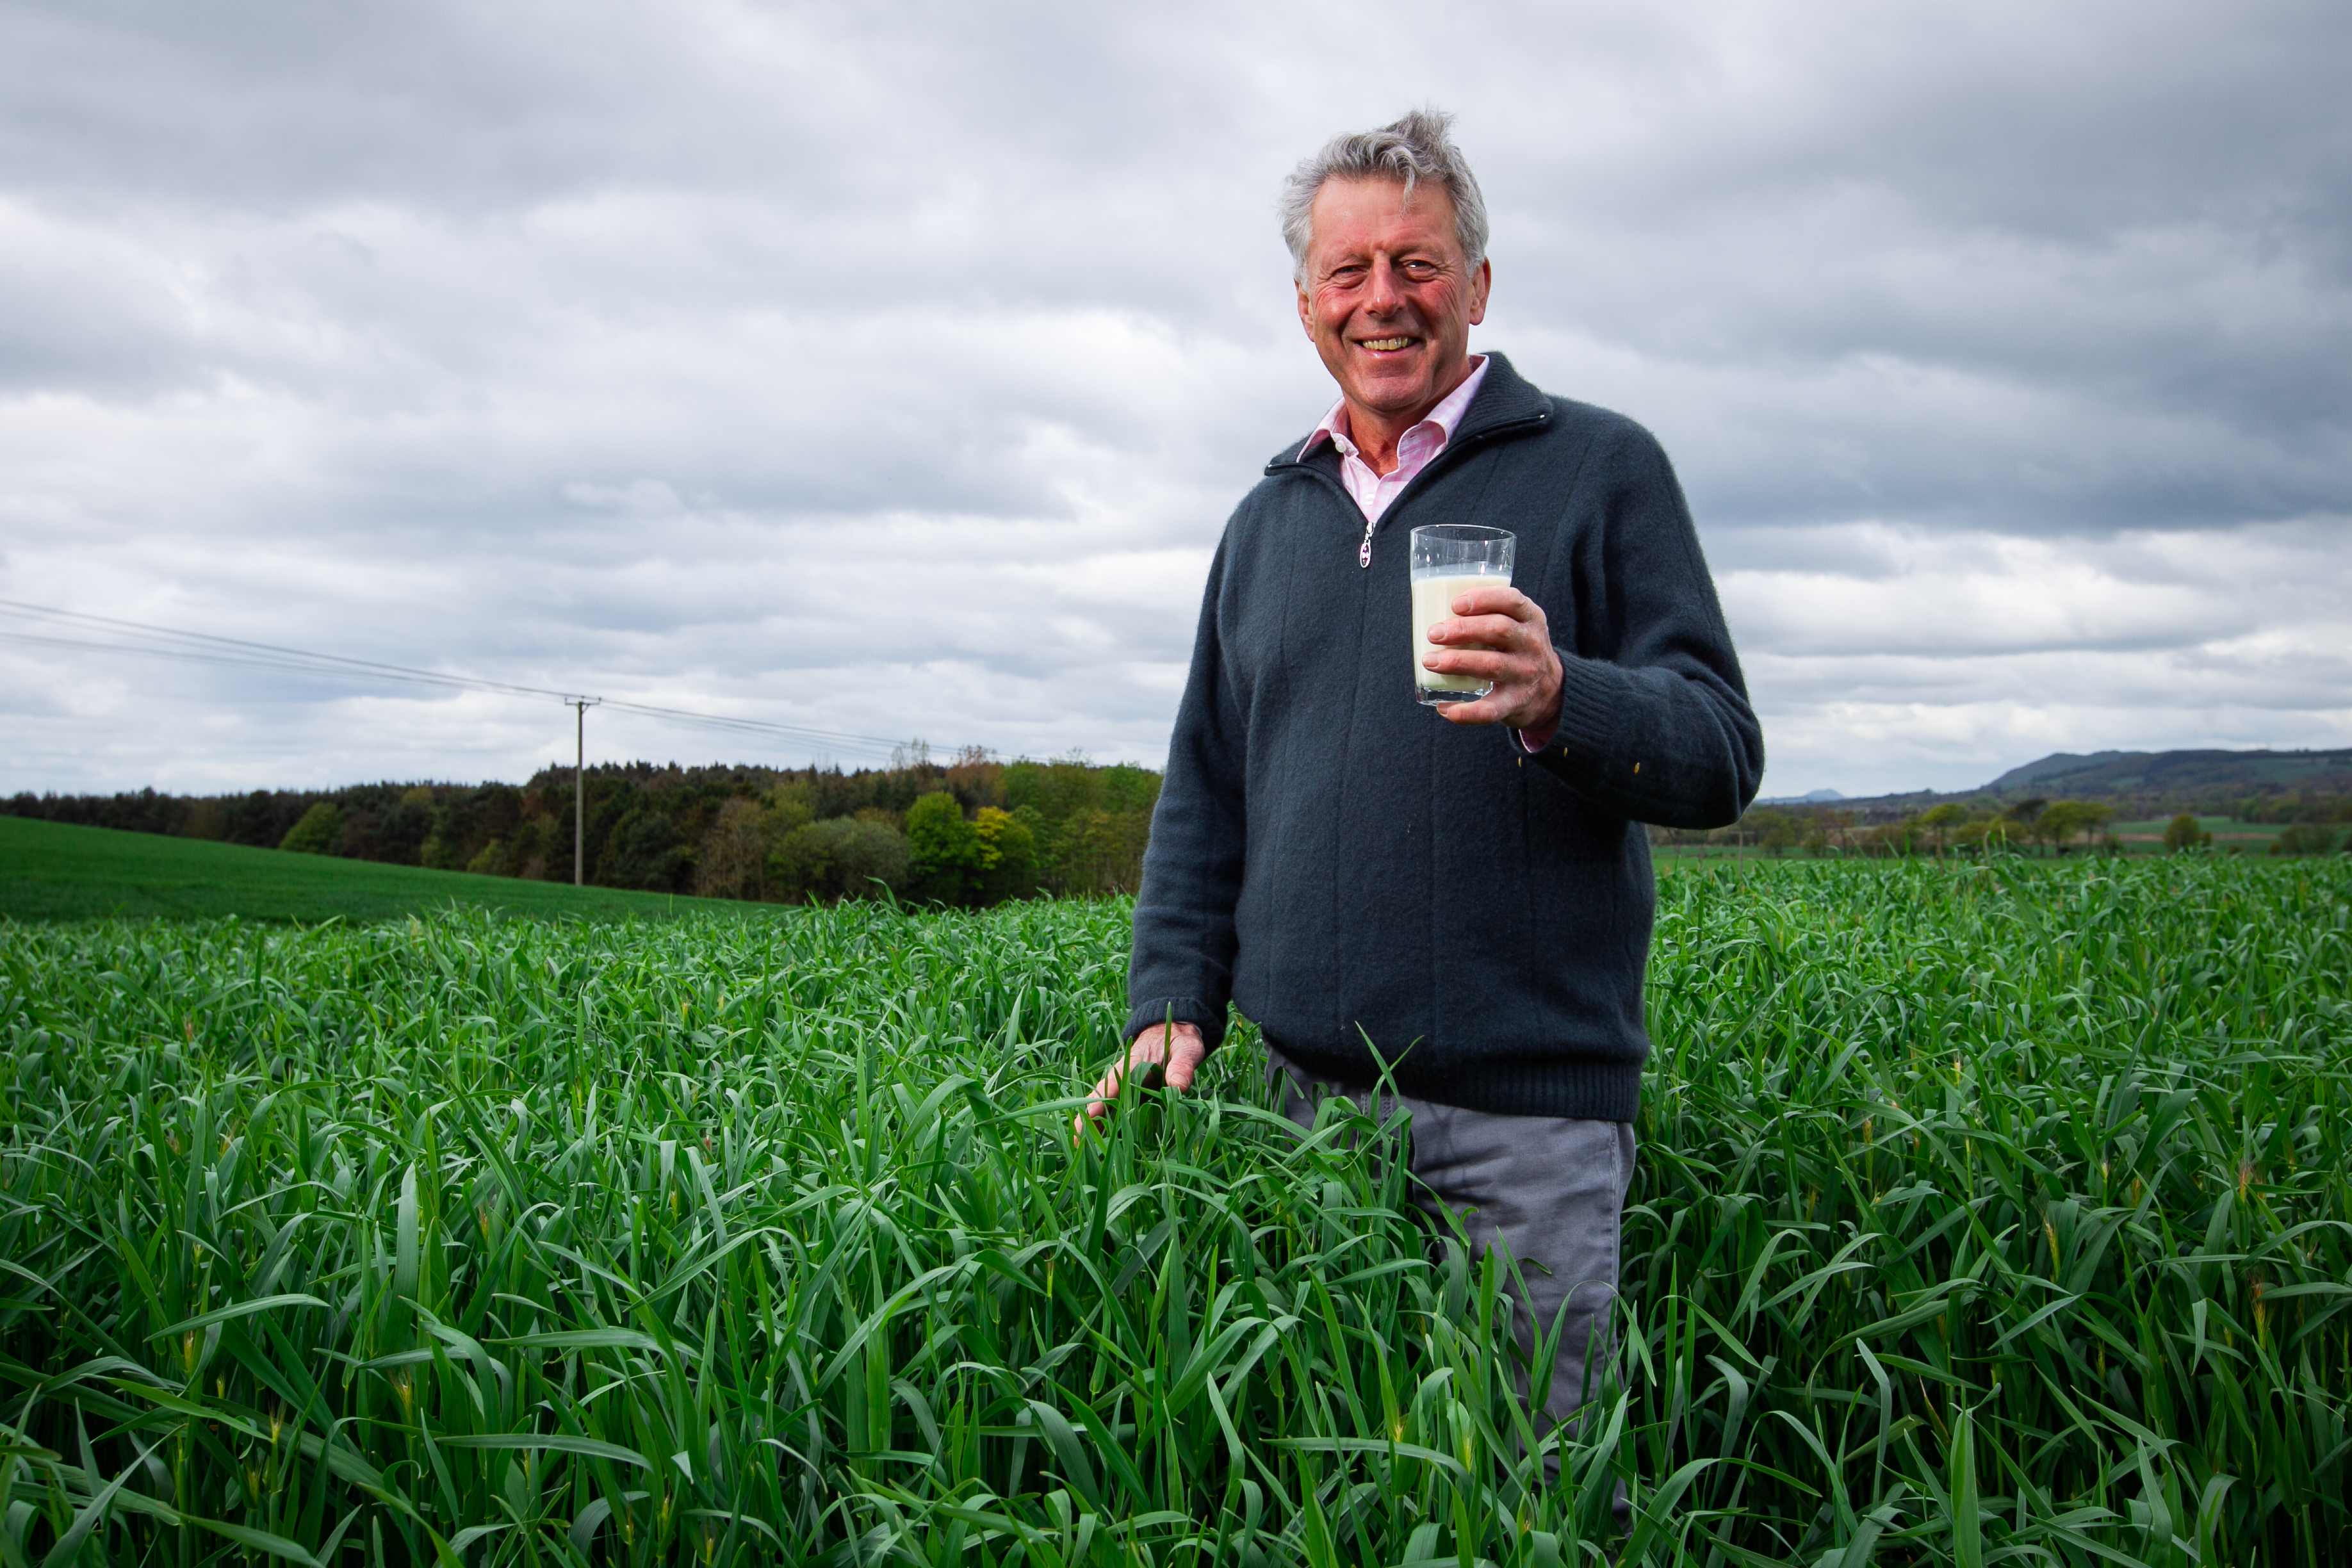 Gordon Rennie believes oats offer huge potential